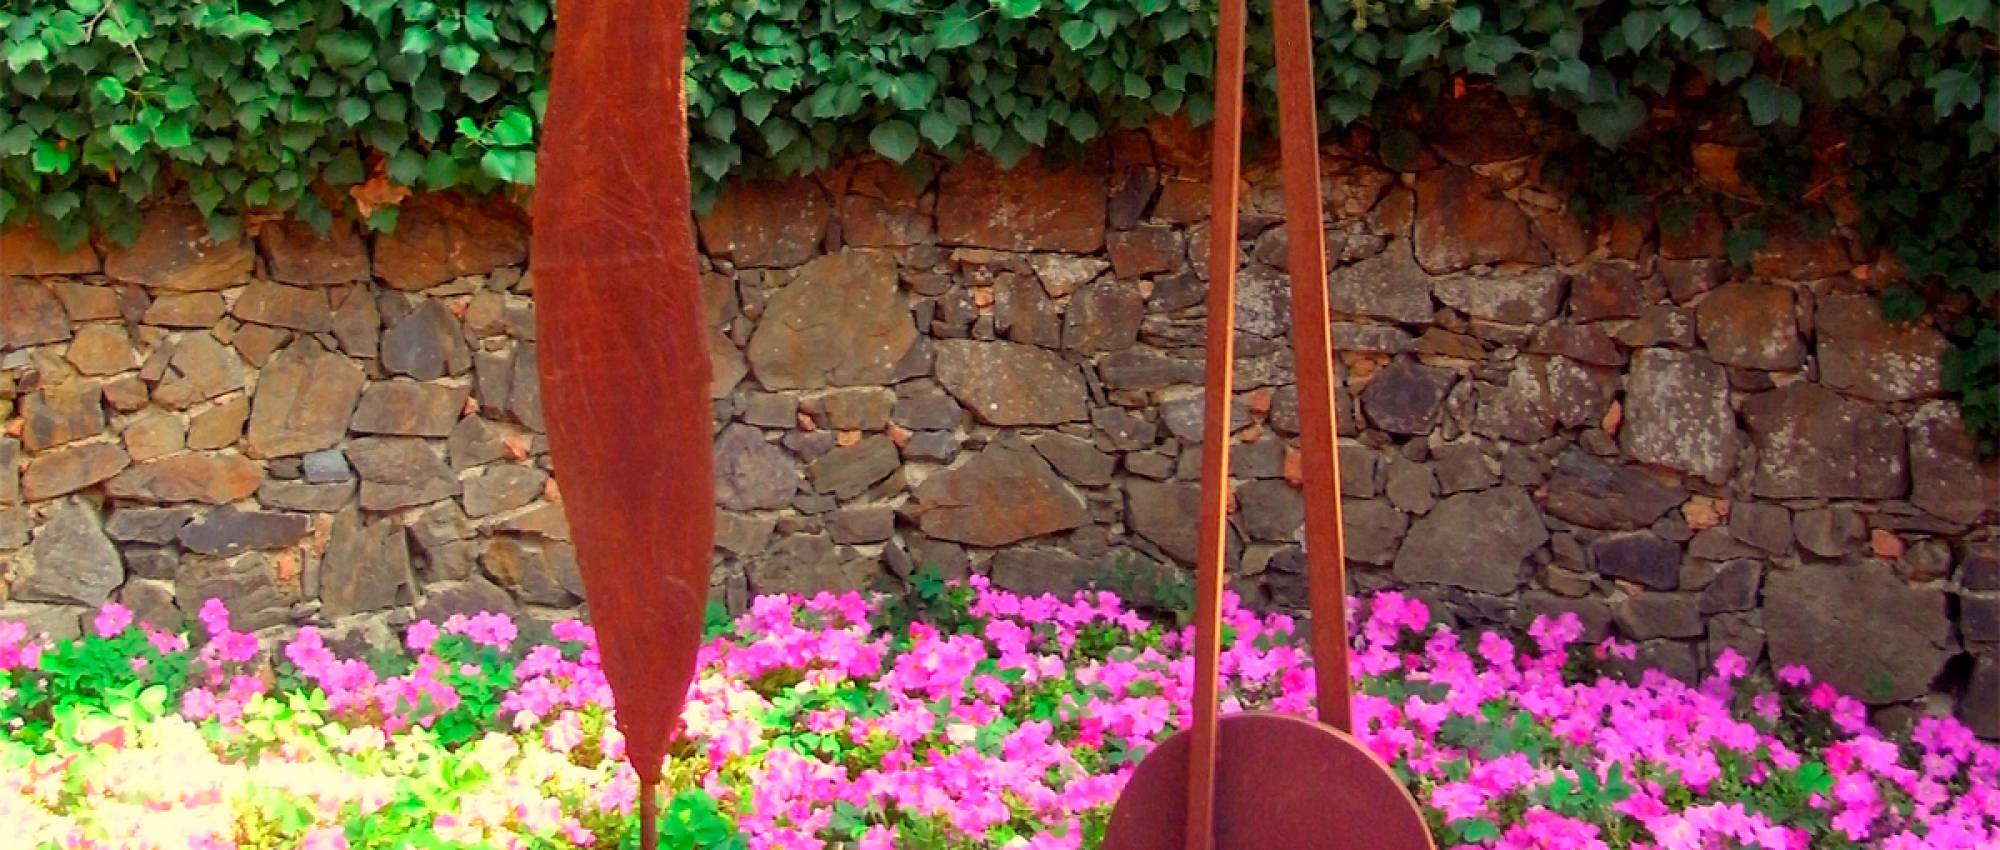 Detalle de "Hèlix de Ferro", en los Jardins de Cap Roig. CC BY-SA 2.0 - Jaume Meneses / Wikimedia Commons